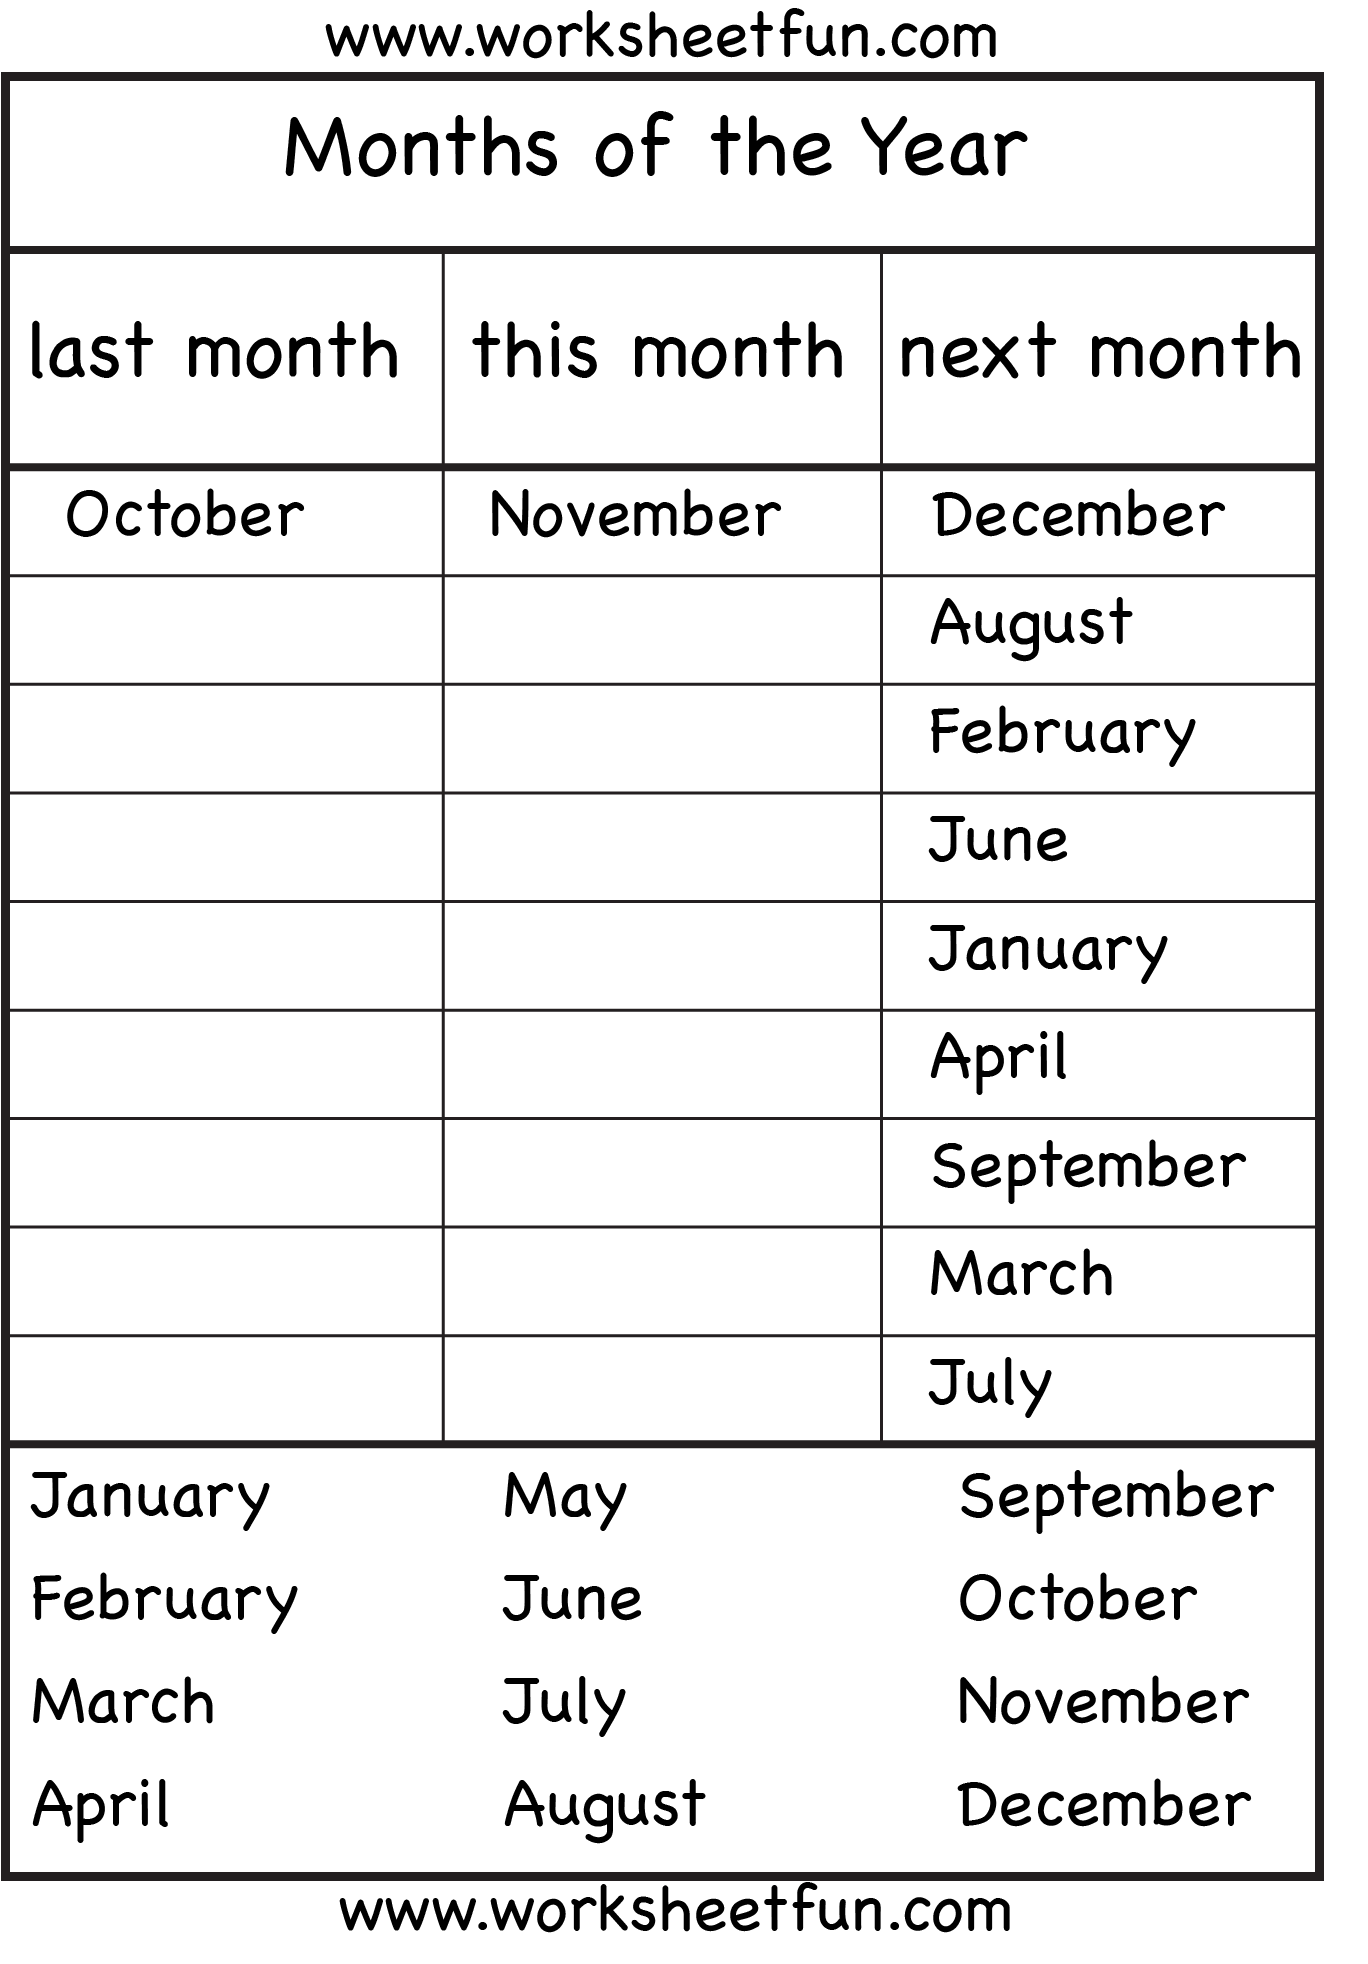 months-of-the-year-4-worksheets-free-printable-worksheets-worksheetfun